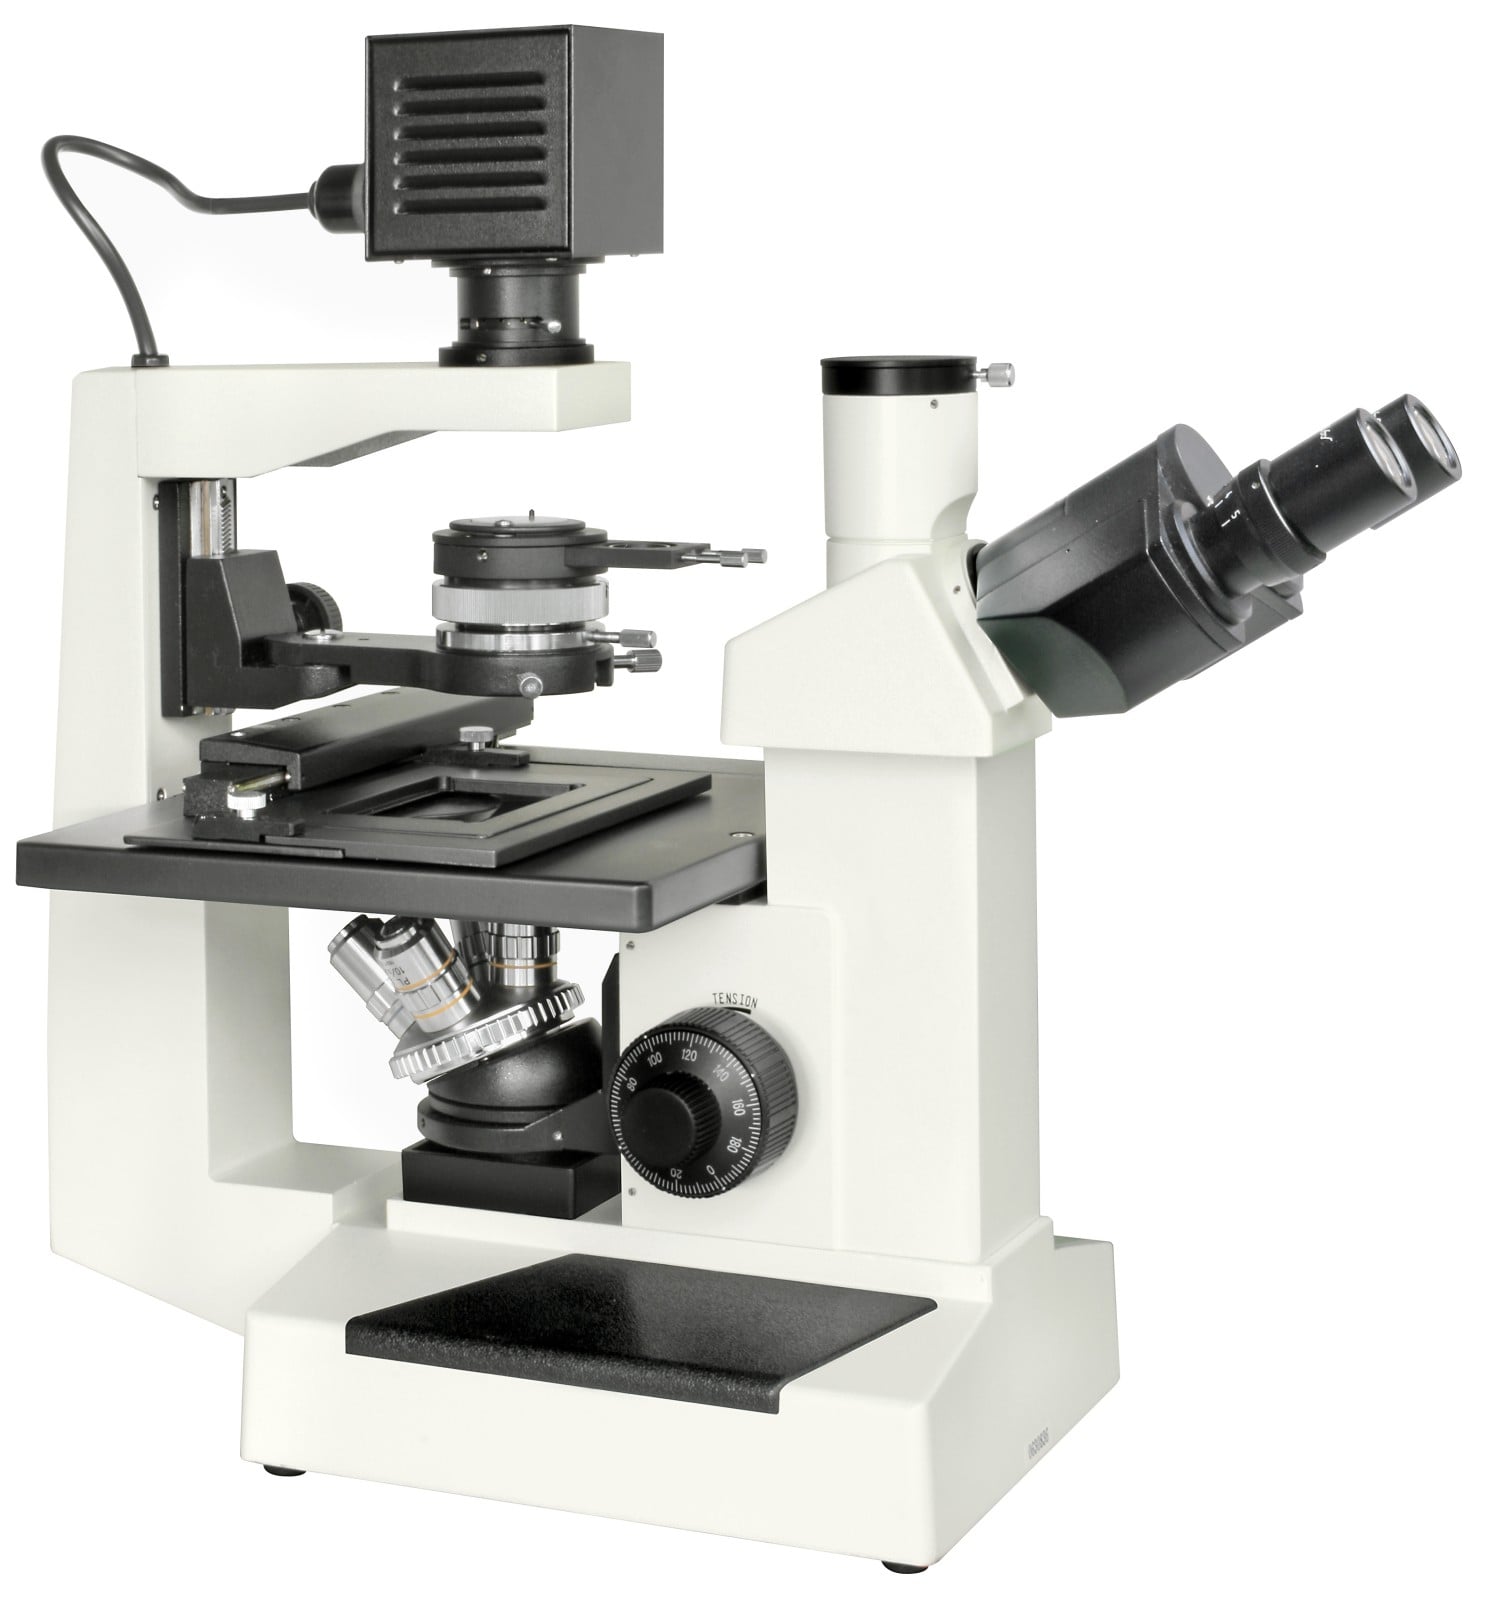 𝗧𝗦 𝗜𝘁𝗮𝗹𝗶𝗮 𝗔𝘀𝘁𝗿𝗼𝗻𝗼𝗺𝘆 - BRESSER Science IVM 401 Microscopio  - Bresser LLC